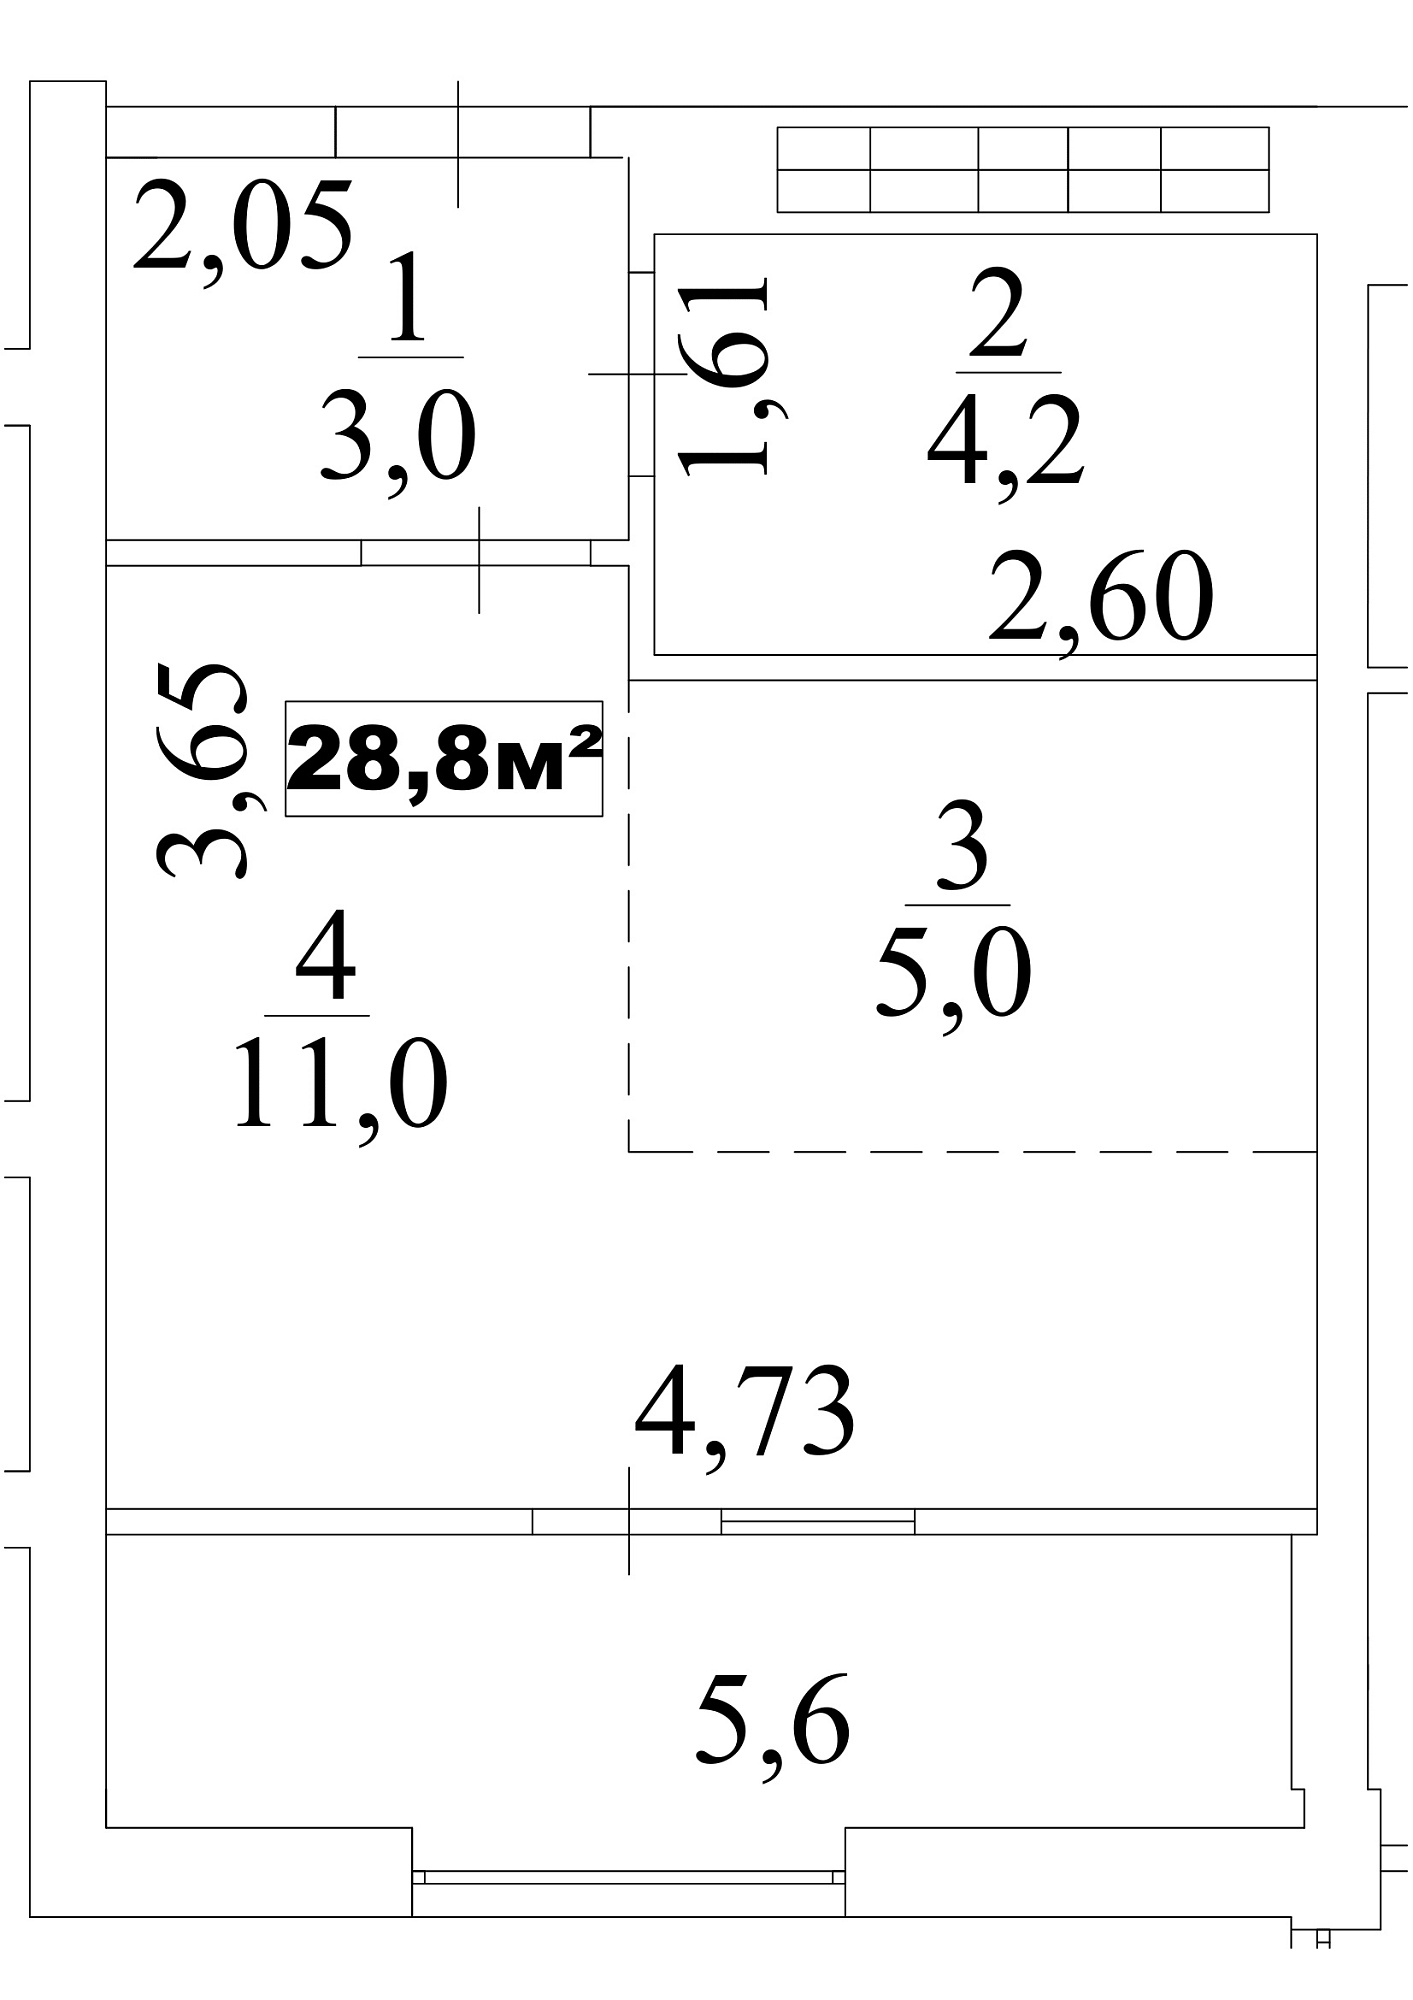 Planning Smart flats area 28.8m2, AB-10-10/00090.